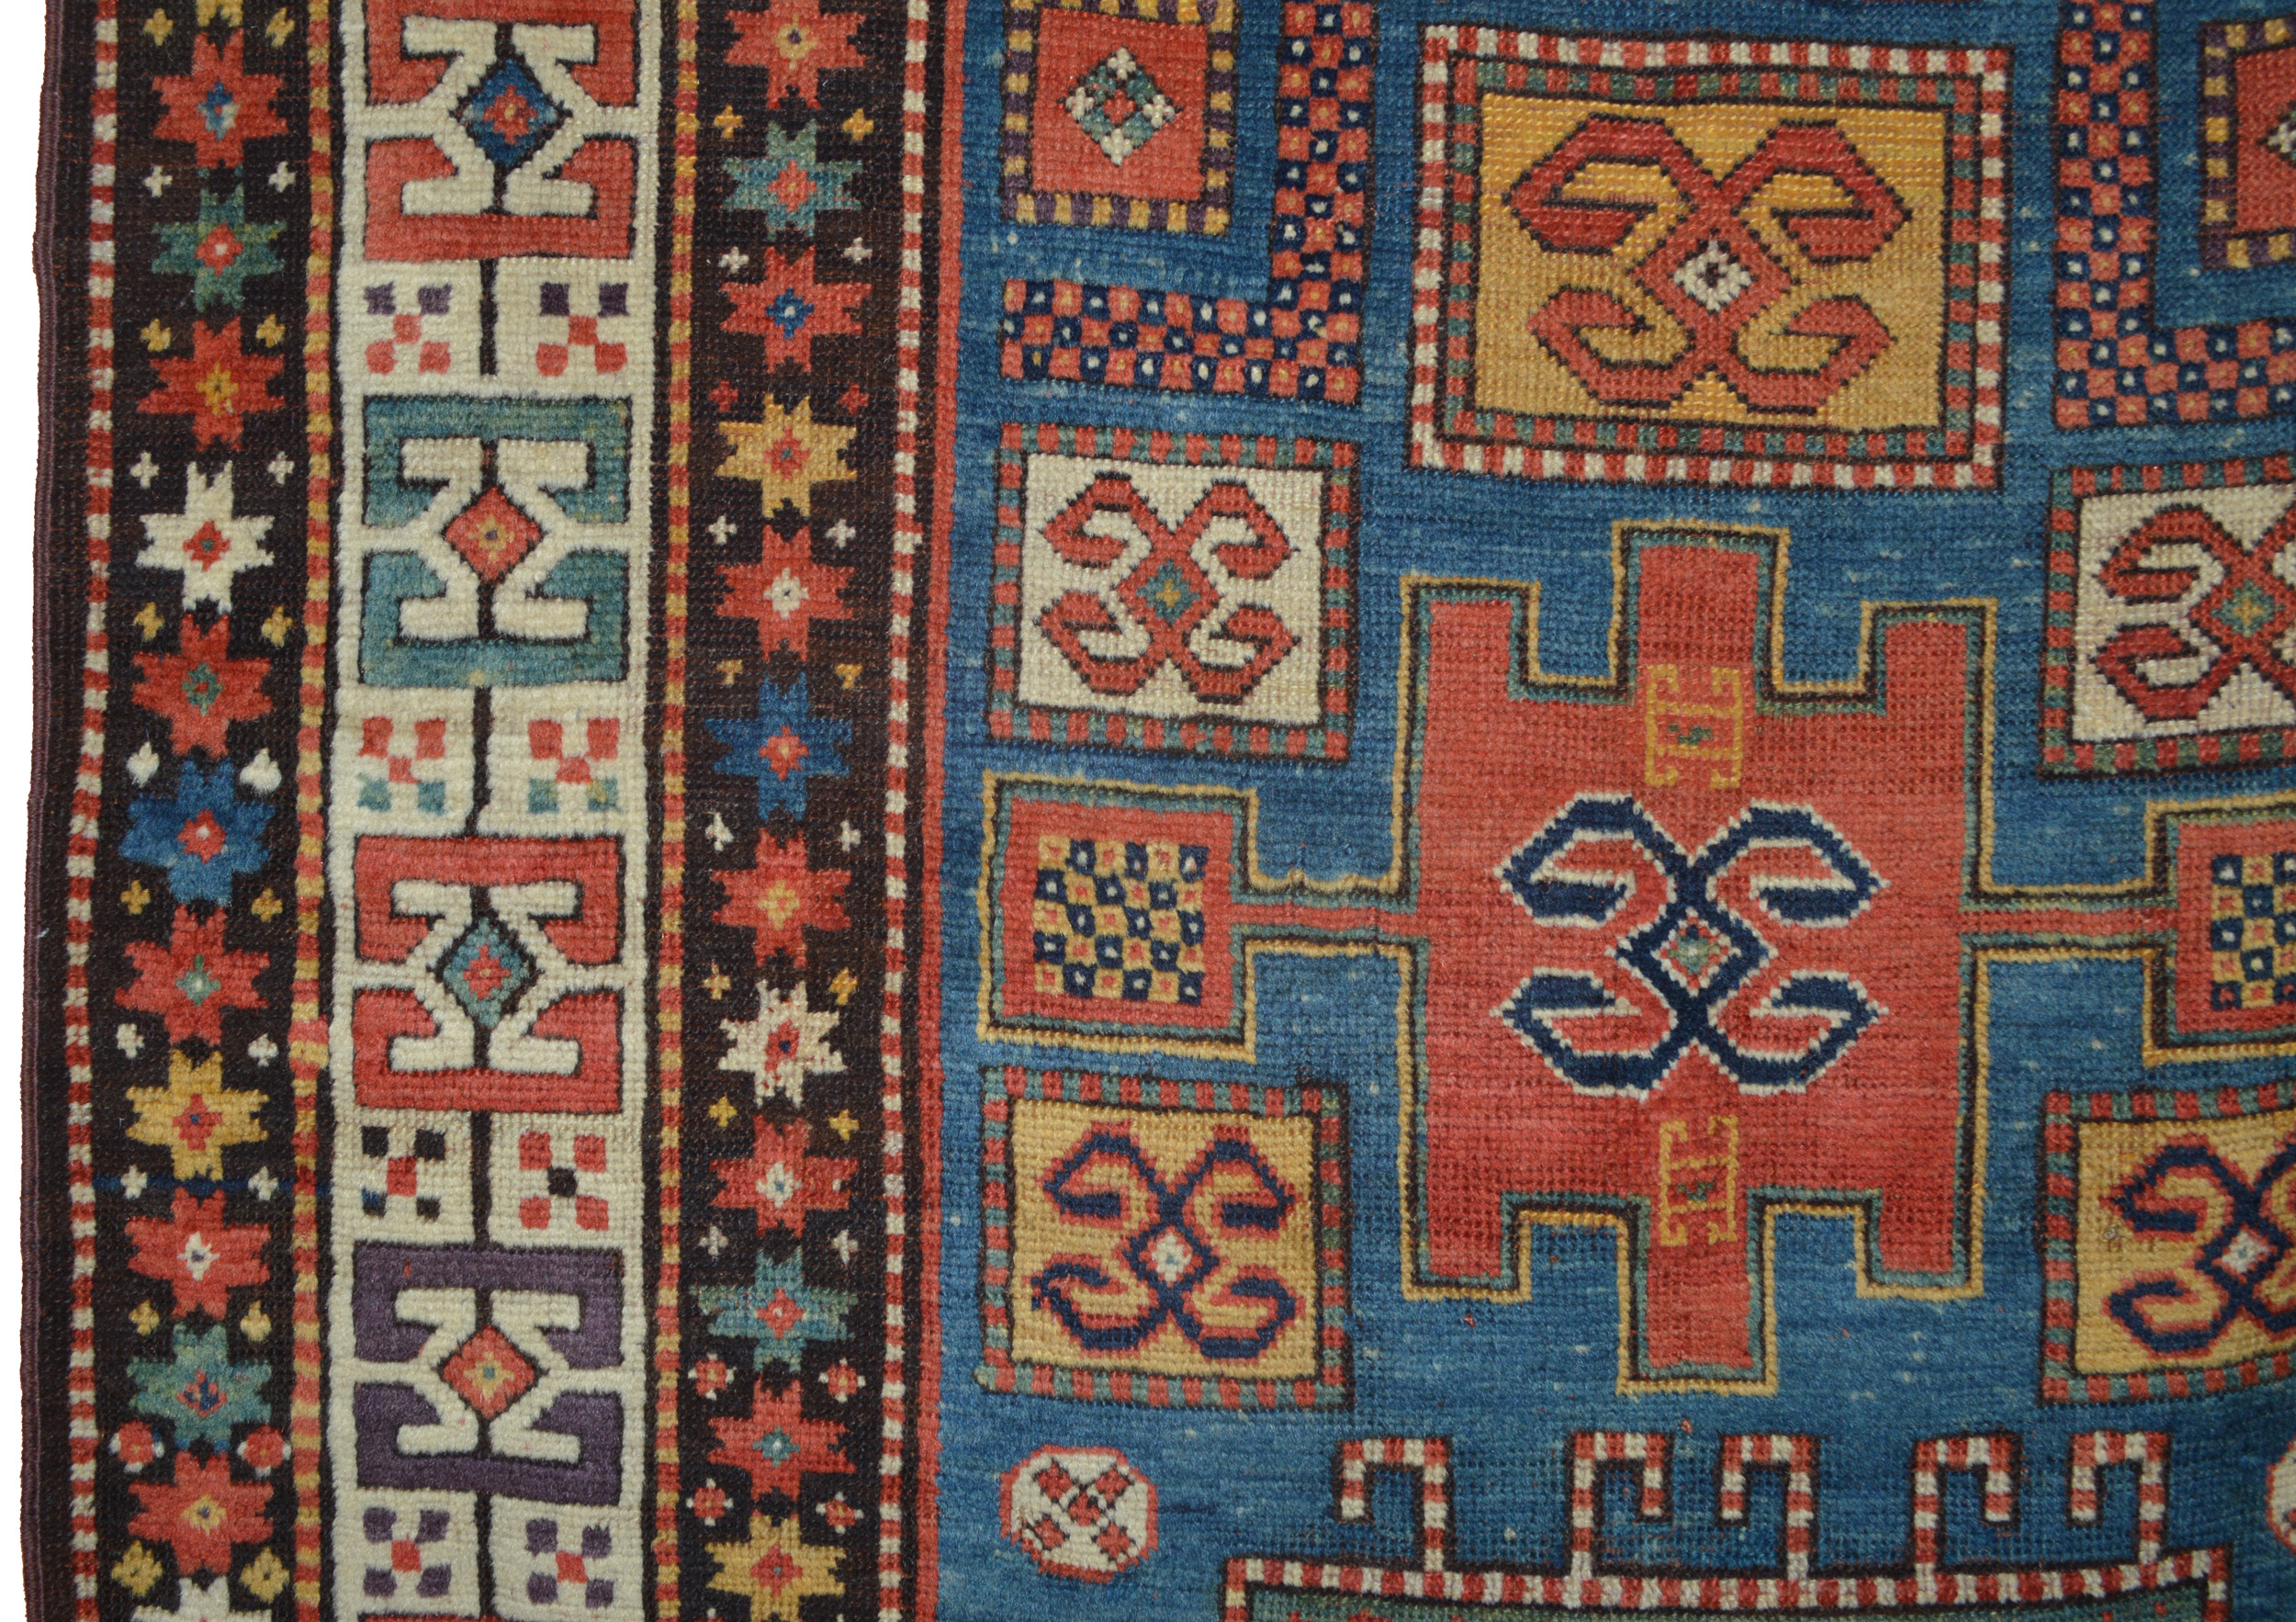 Field and border detail of a 19th century southwest Caucasian Karachoph Kazak rug with a denim blue field and ivory border - Douglas Stock Gallery, South Ntiack, MA, Boston area antique Oriental rugs